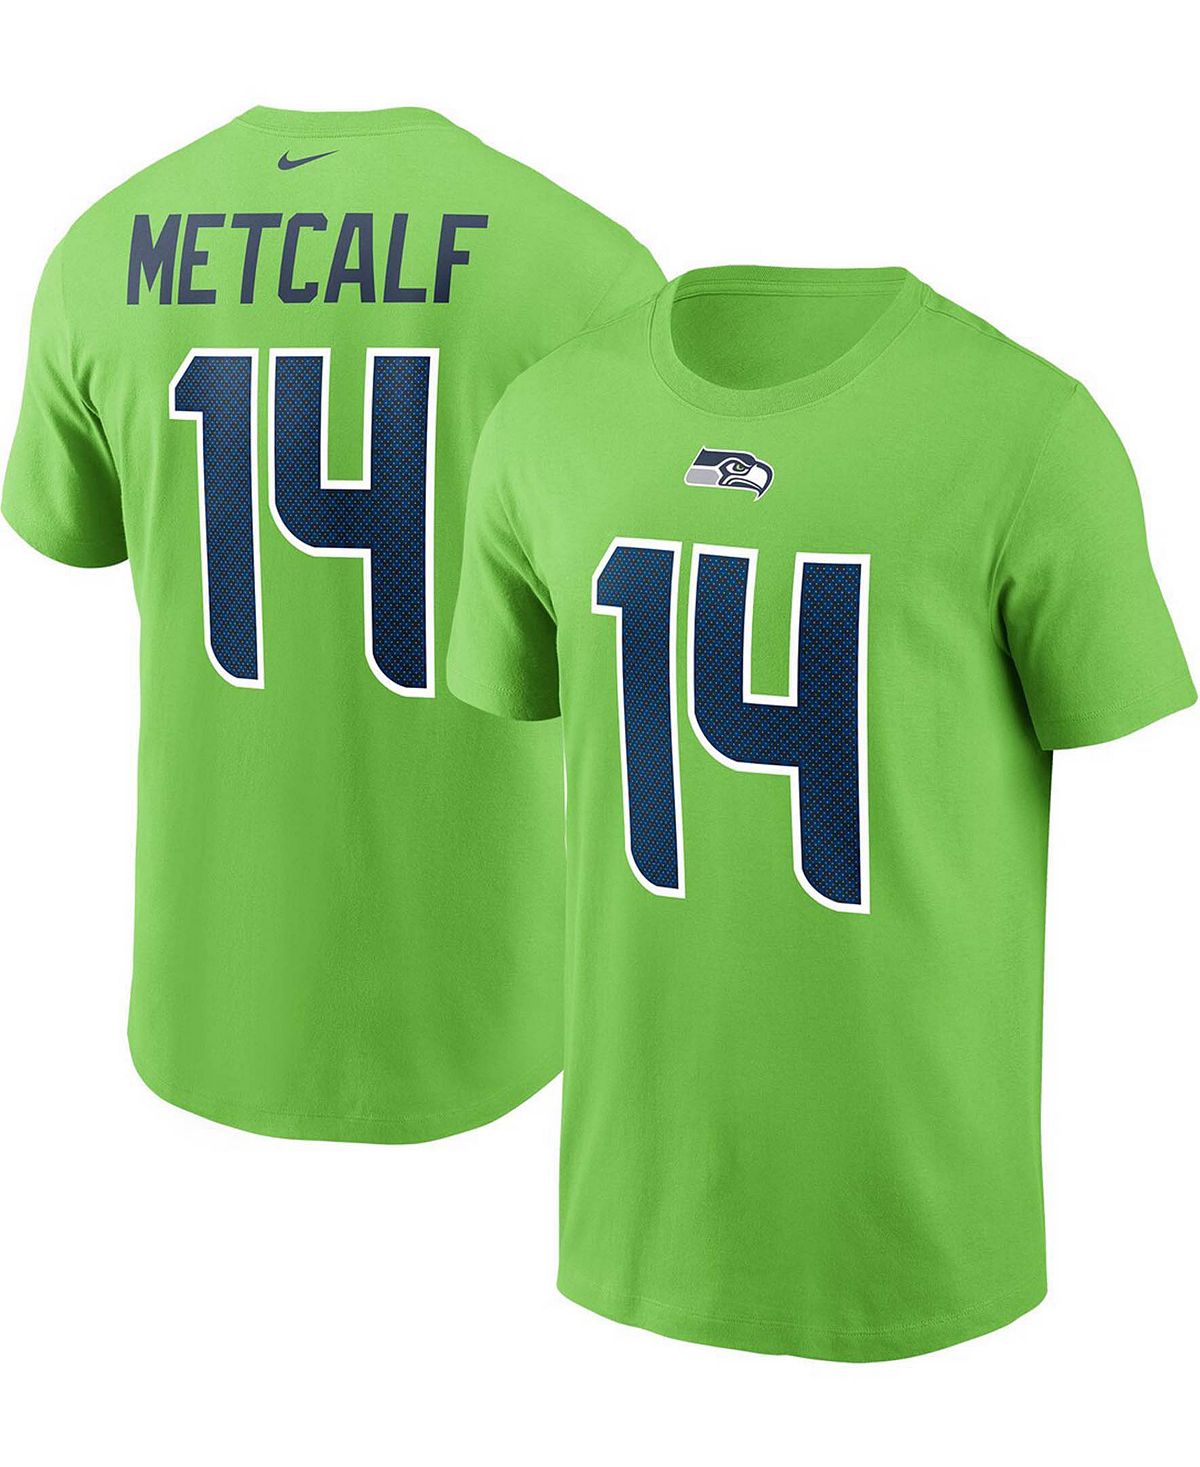 Мужская футболка dk metcalf neon green seattle seahawks с именем и номером Nike, мульти мужская футболка с капюшоном dk metcalf college navy seattle seahawks с именем и номером tri blend fanatics синий